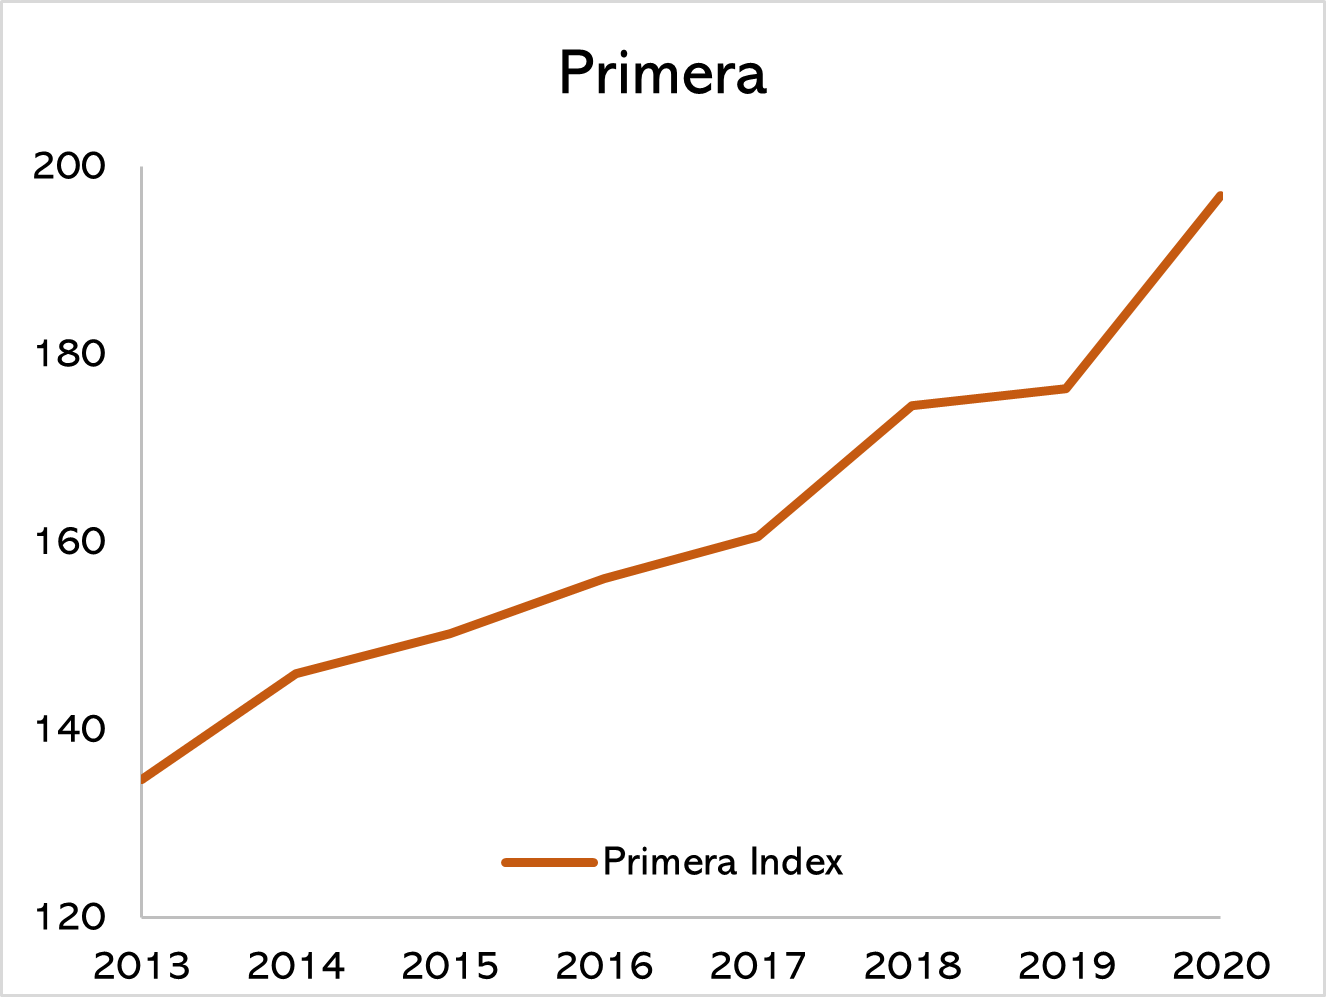 Innovis breeding sheep chart showing improvements to the Primera sheep breed index